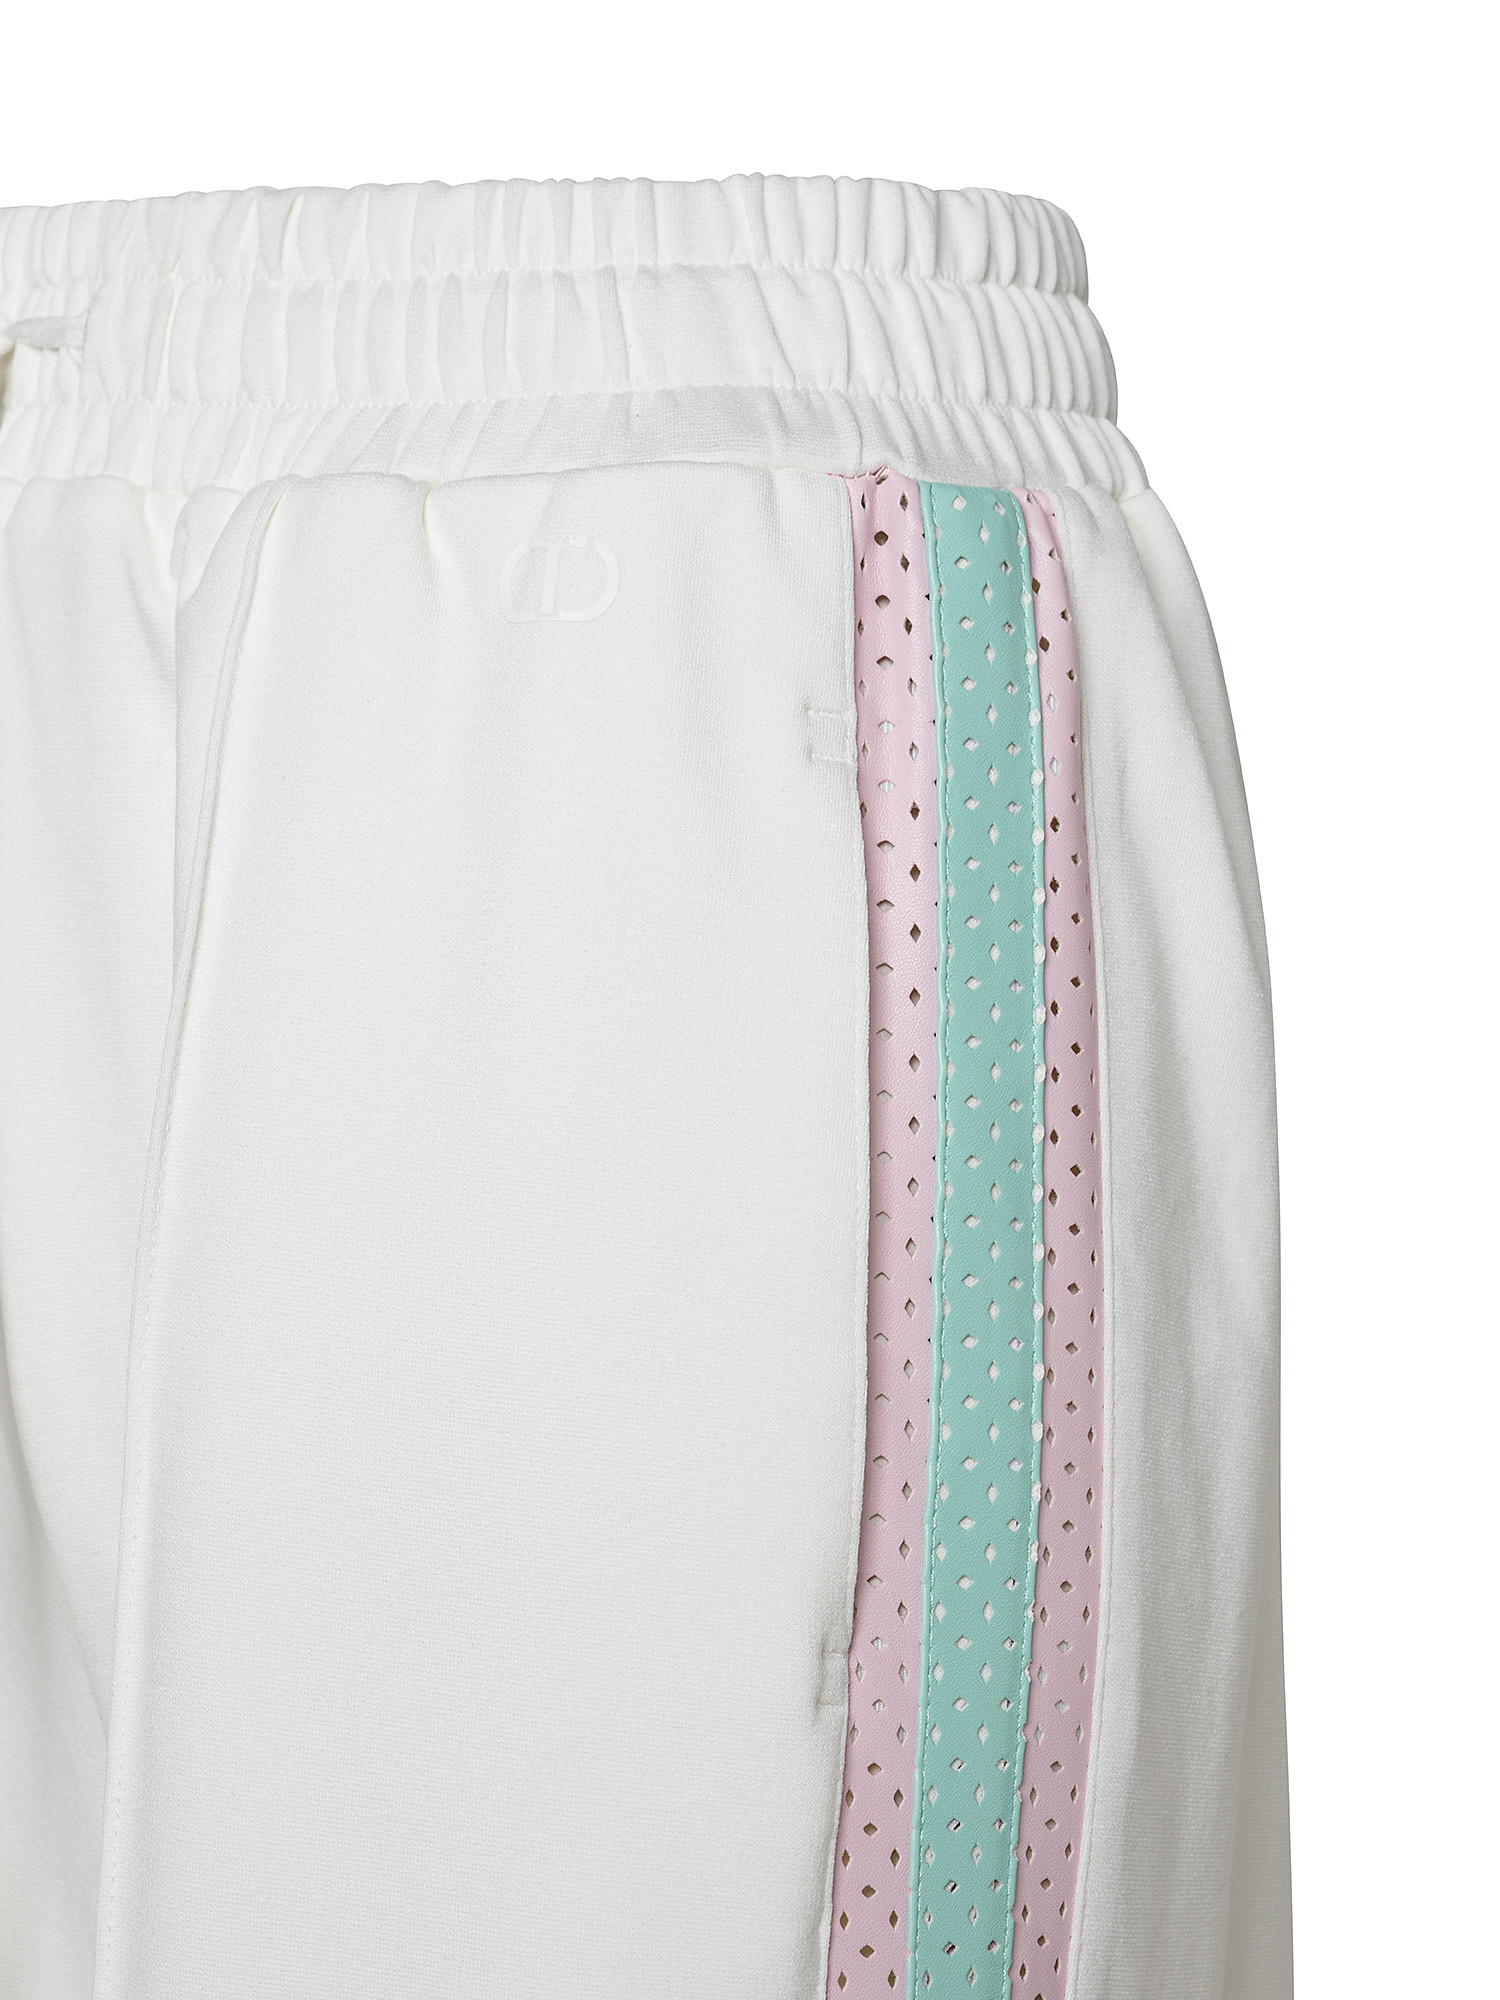 Pantalone con inserti traforati, Bianco, large image number 2